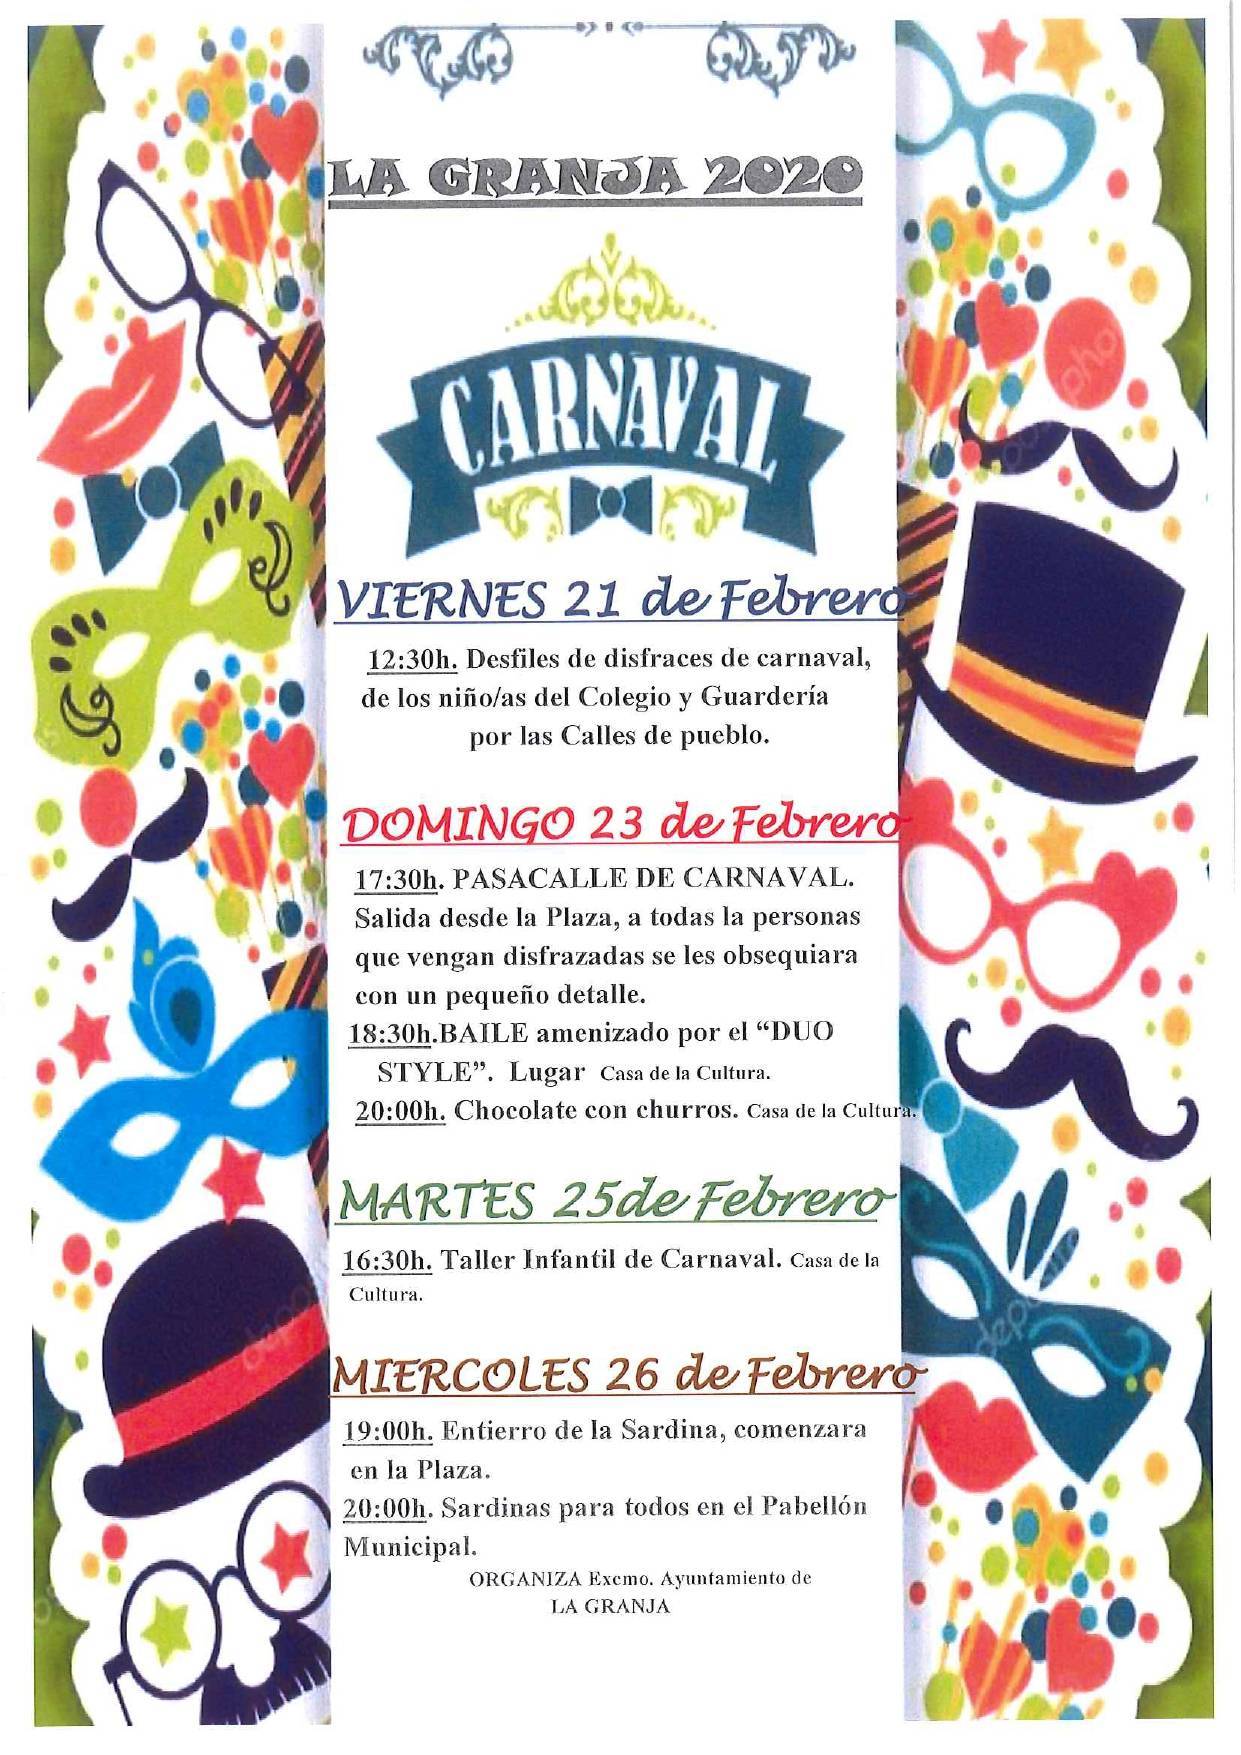 Carnaval 2020 - La Granja (Cáceres)